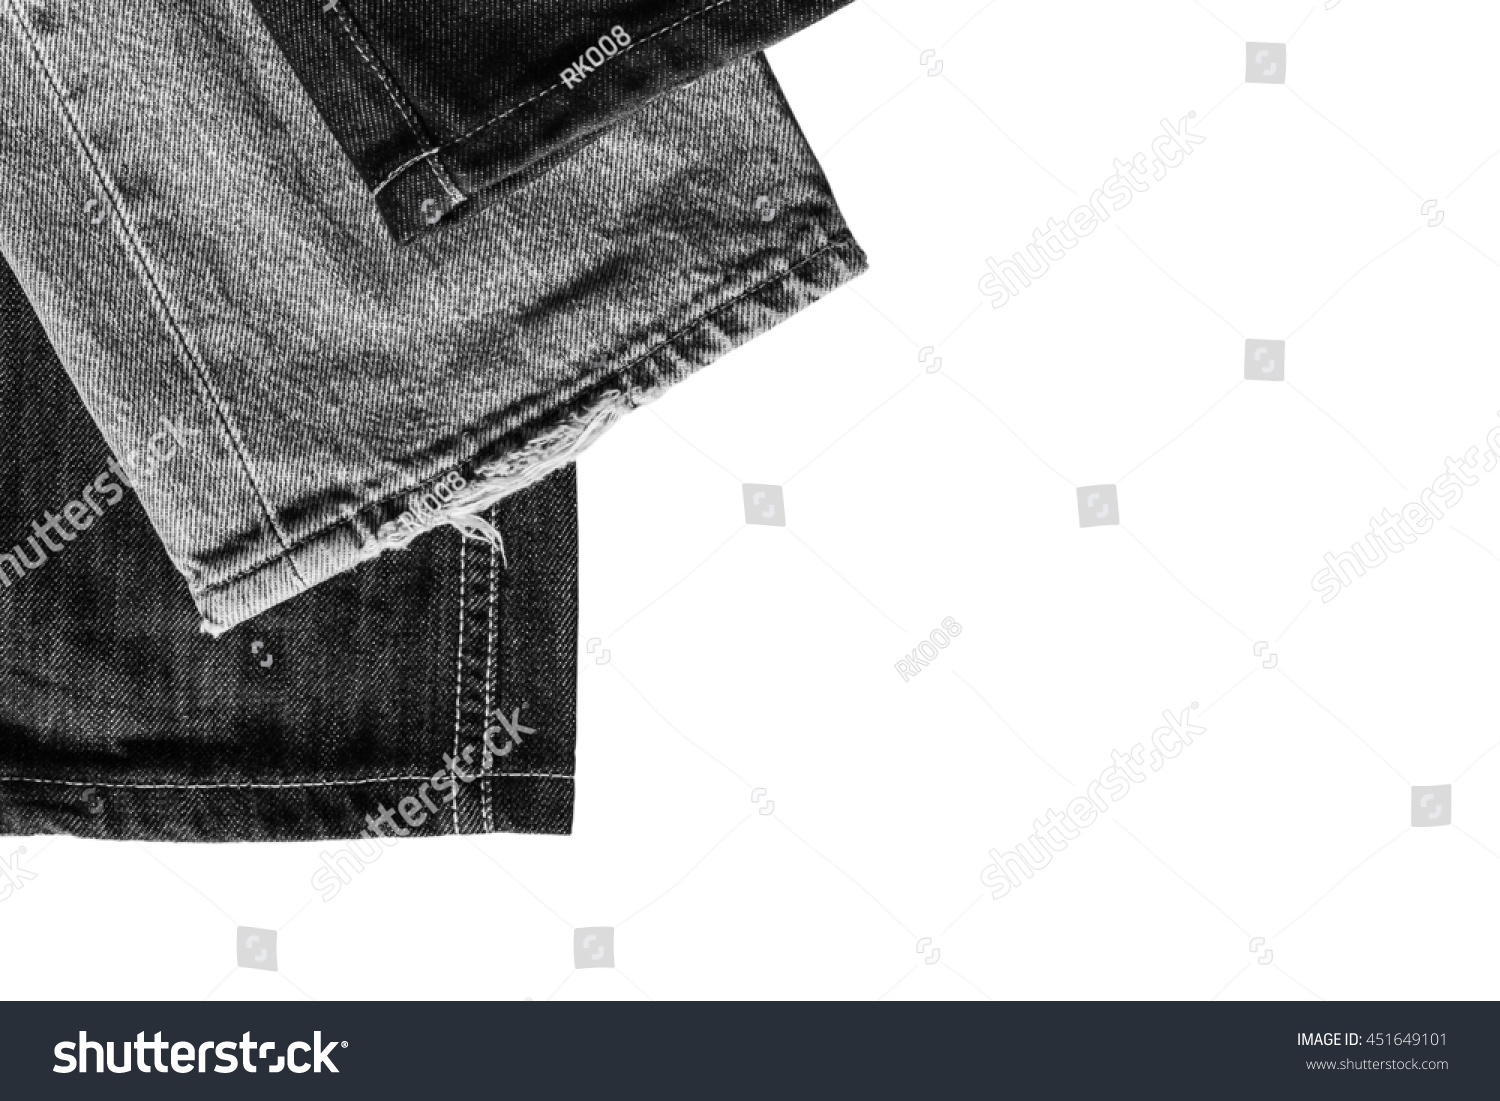 Black Jeans On White Background Stock Photo 451649101 - Shutterstock